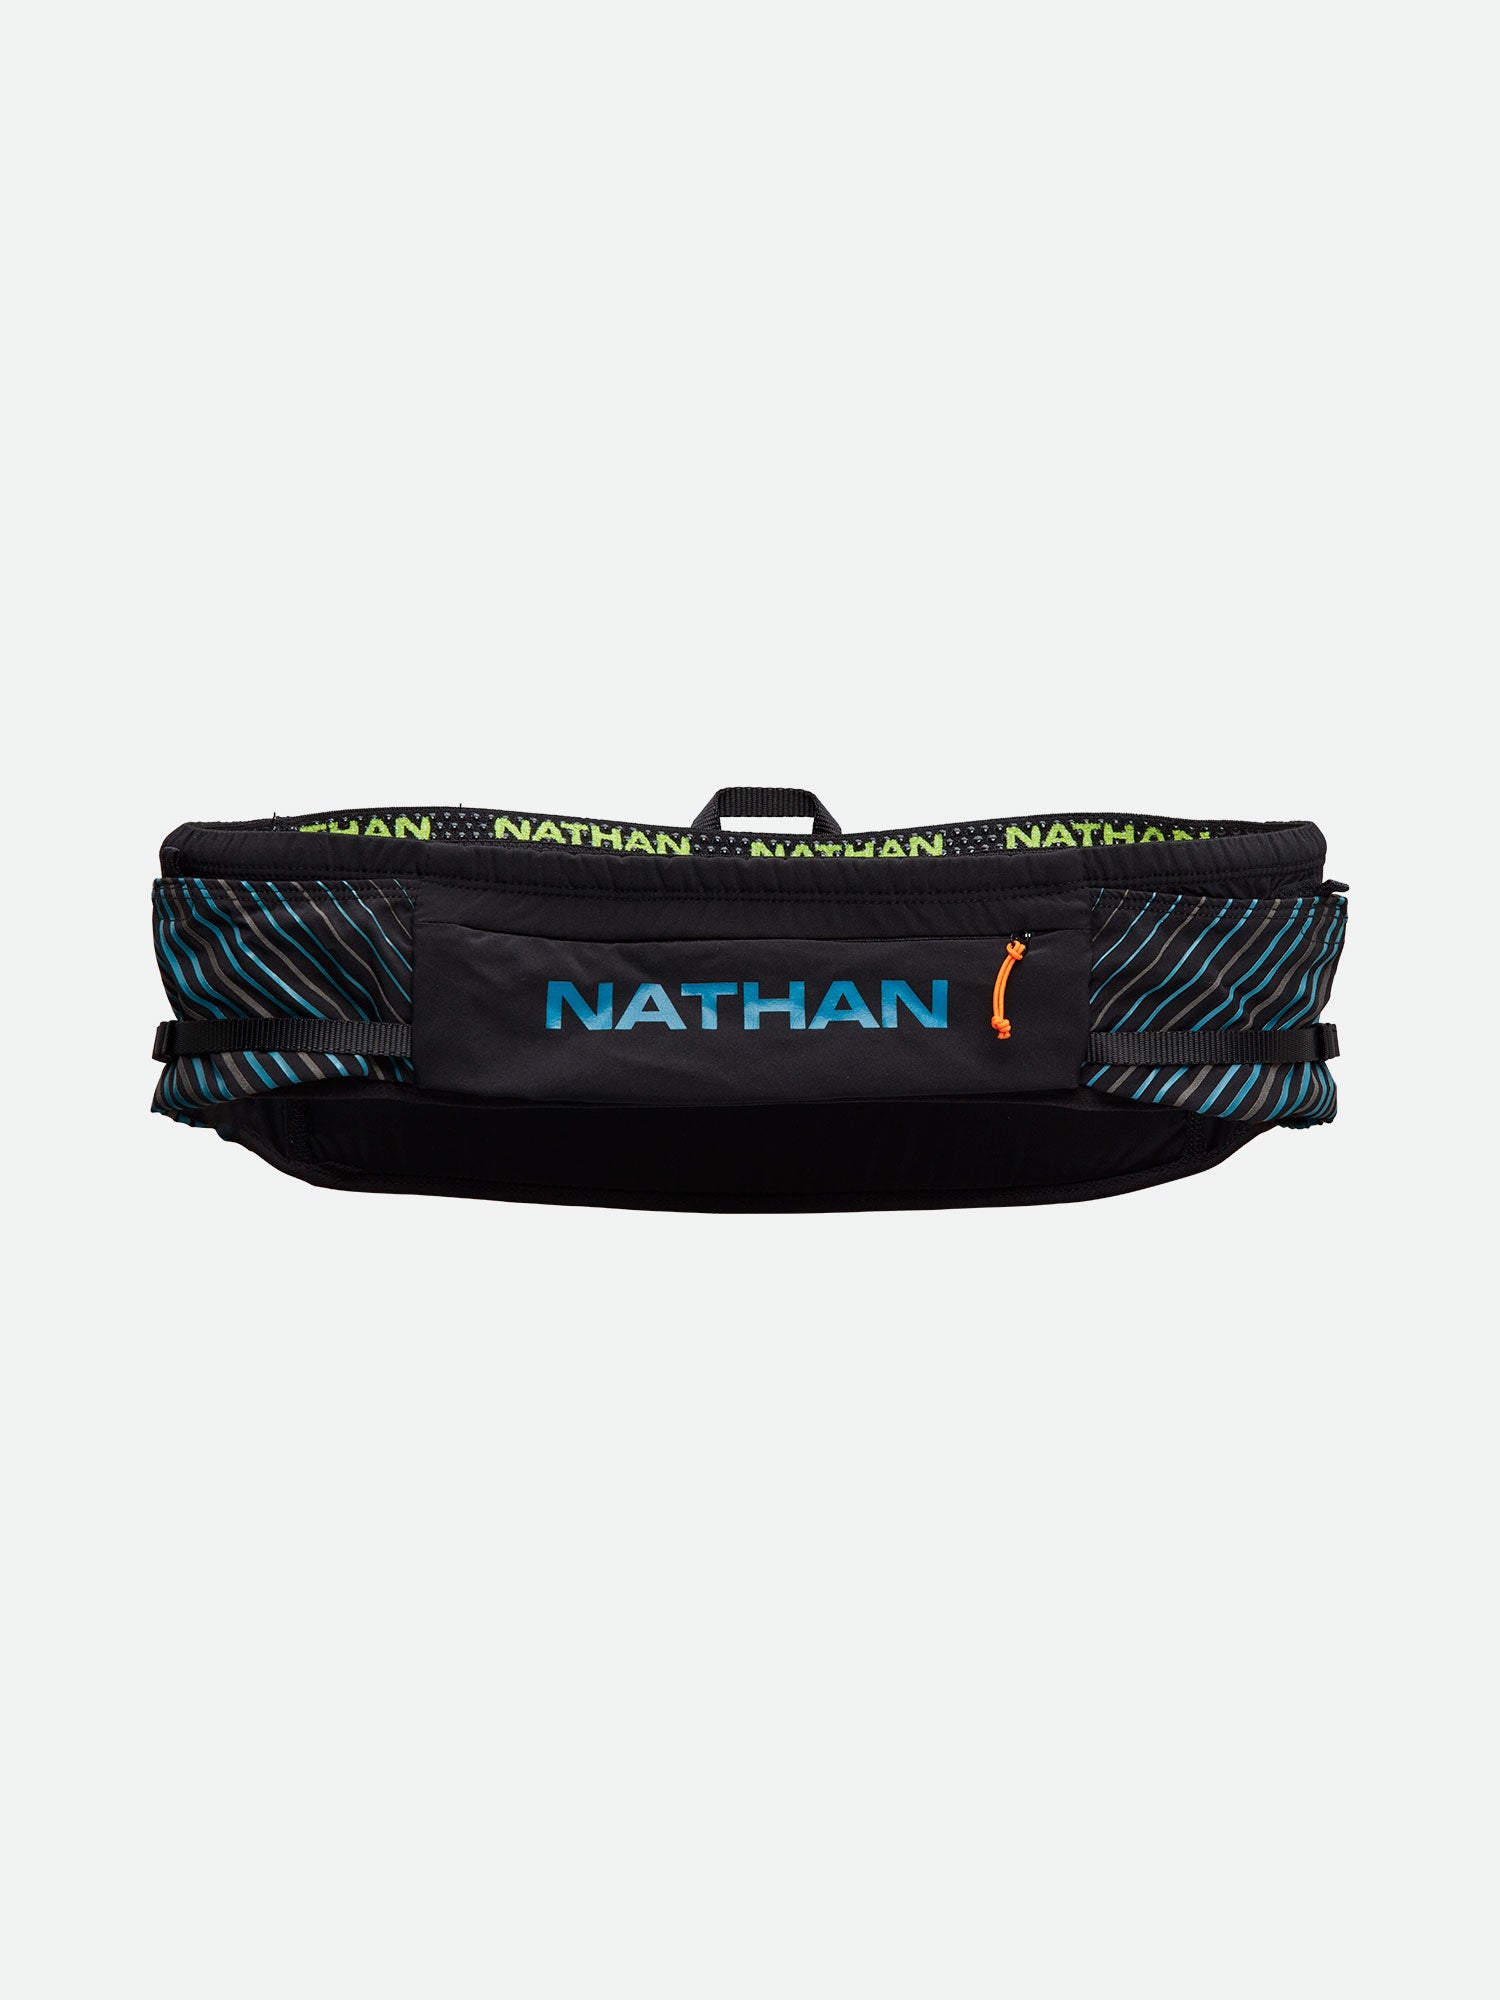 Canada] Nathan SpeedDraw Plus Insulated Bottle 535 ml $25 : r